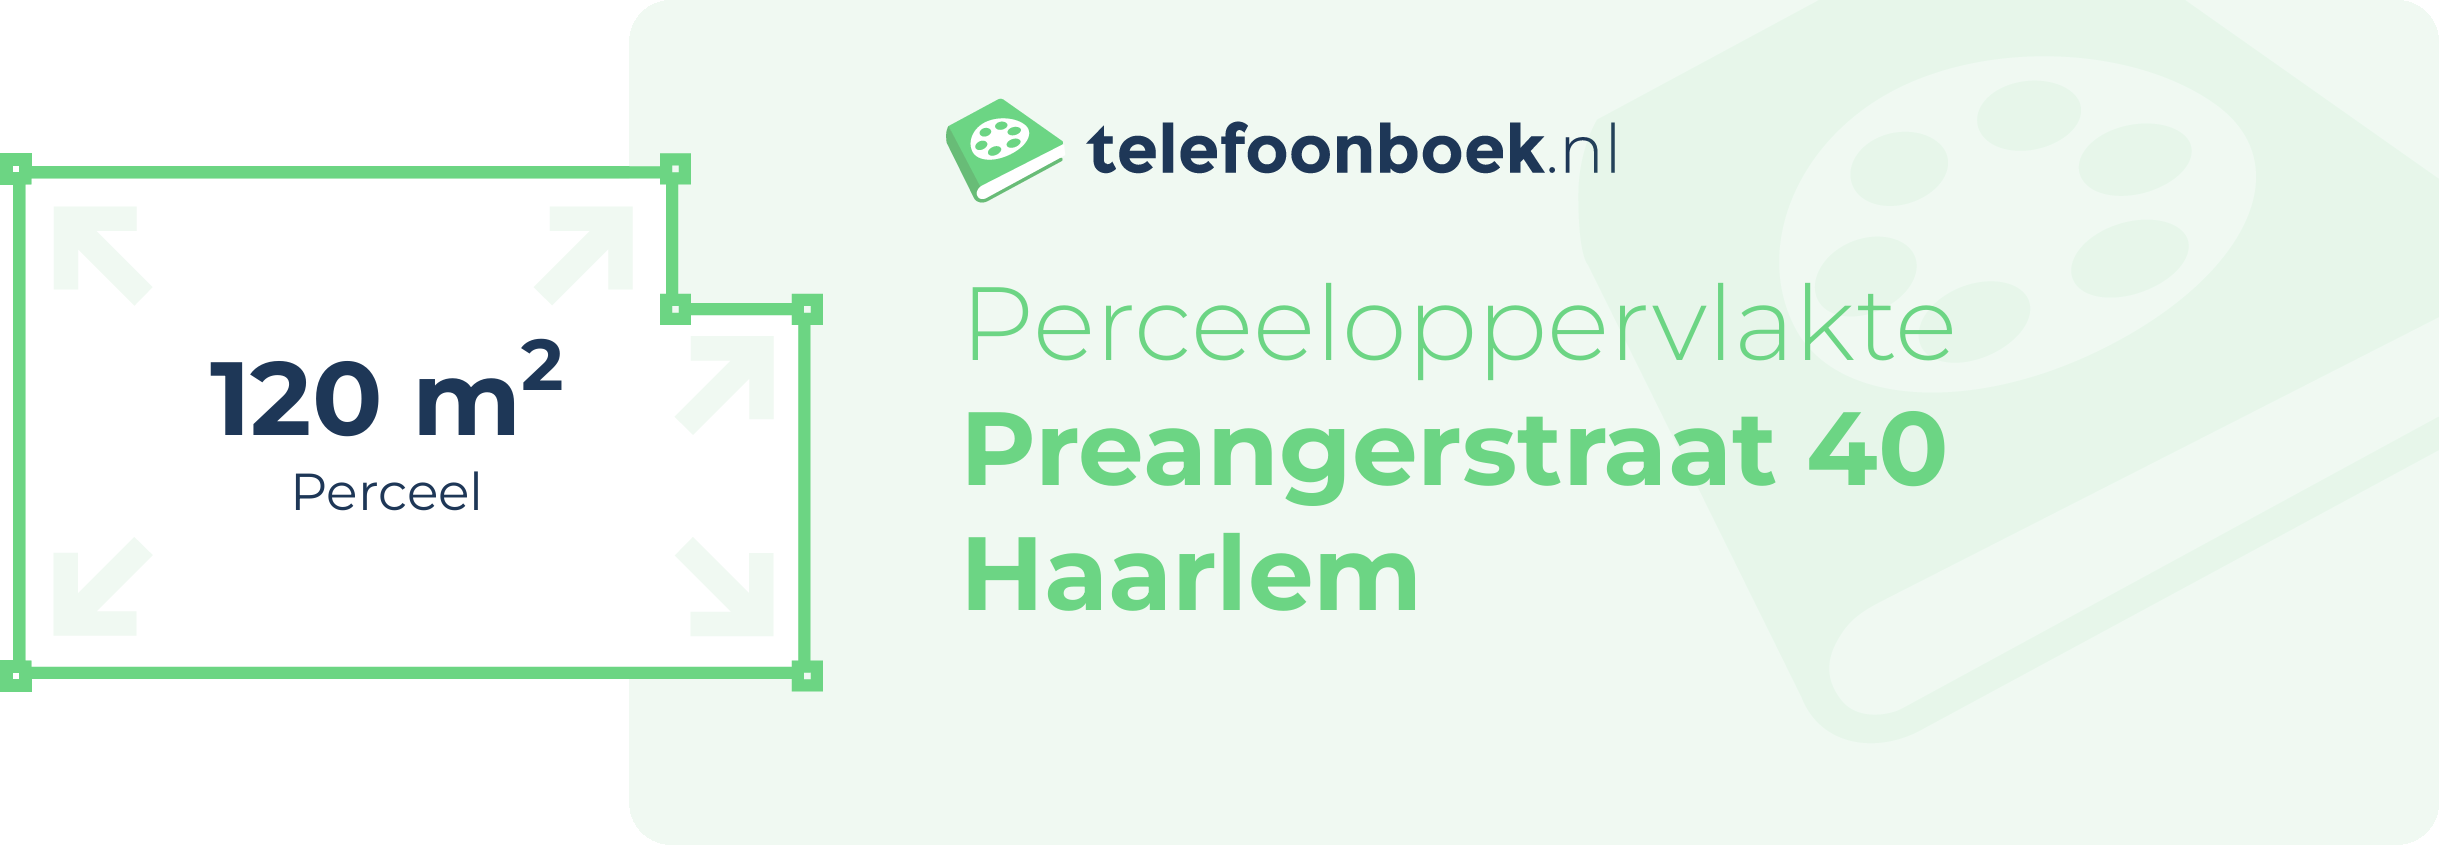 Perceeloppervlakte Preangerstraat 40 Haarlem